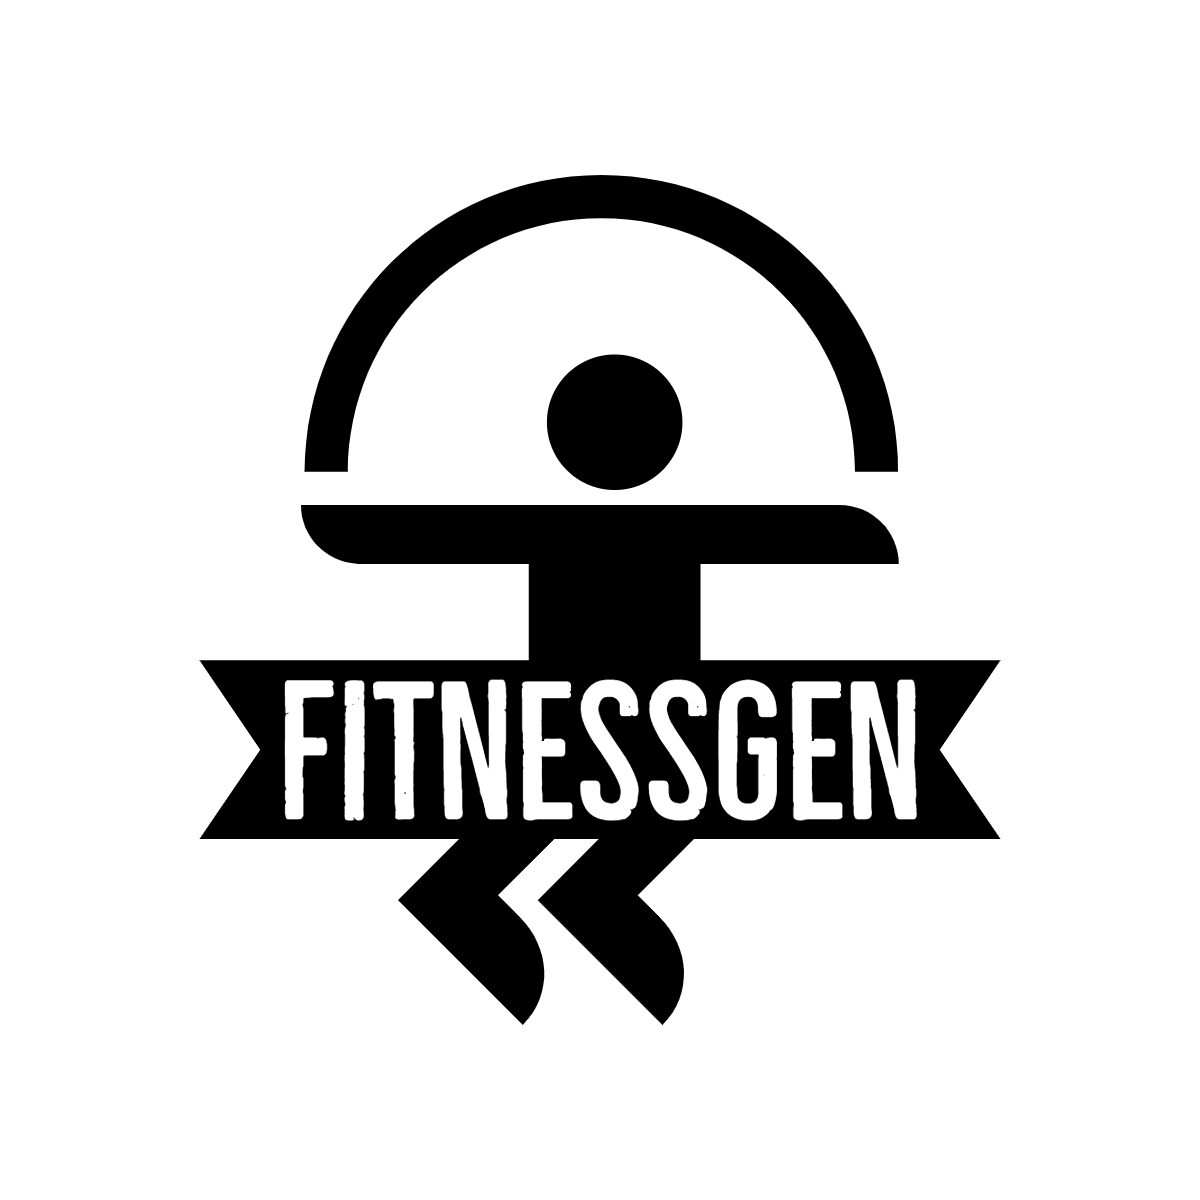 FitnessGen-logos_black.png